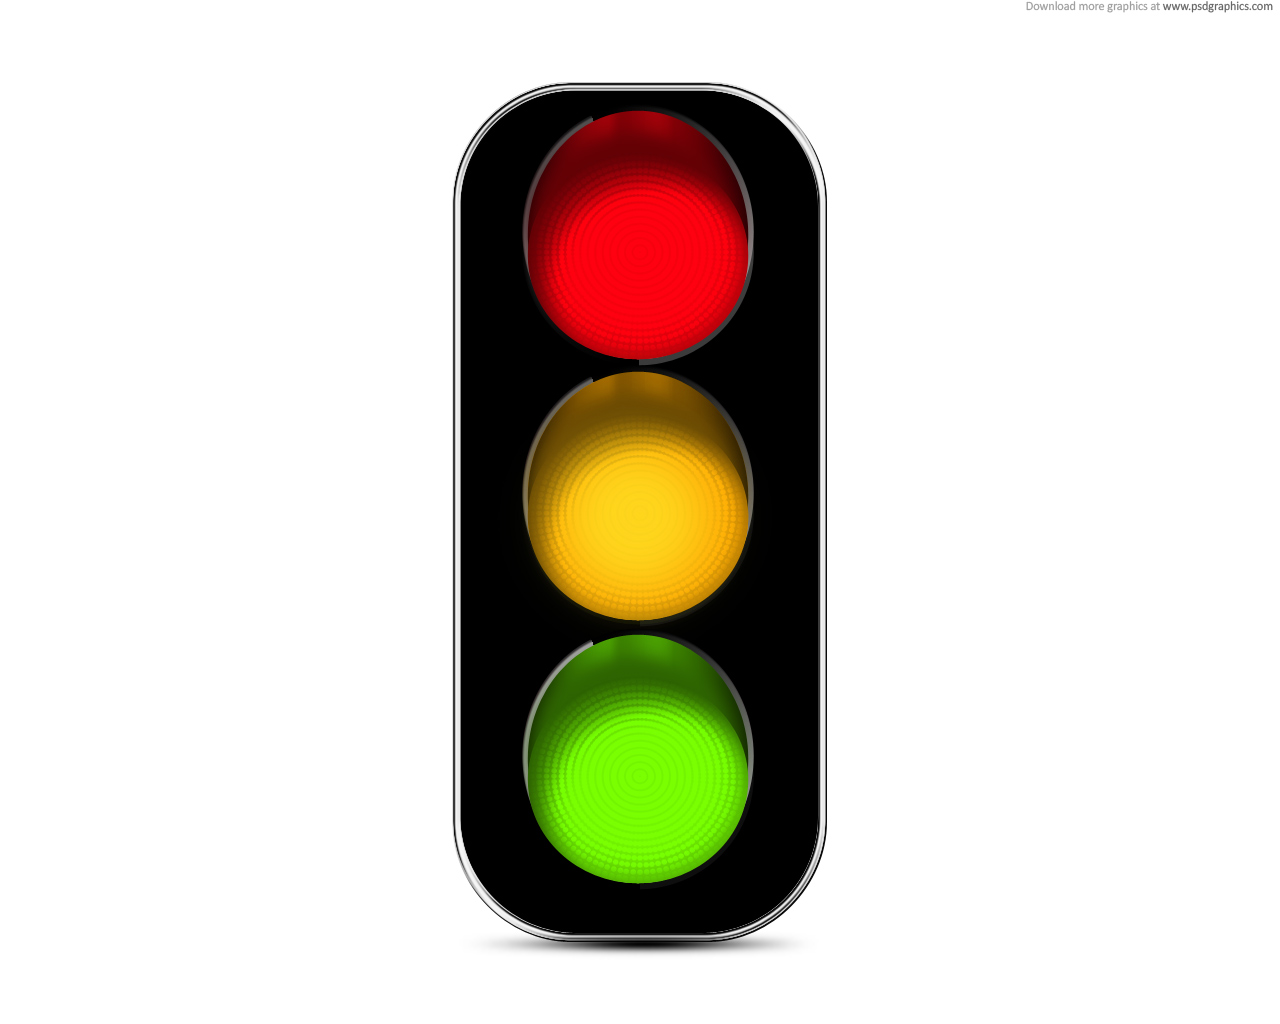 Traffic Light Graphic | Free Download Clip Art | Free Clip Art ...